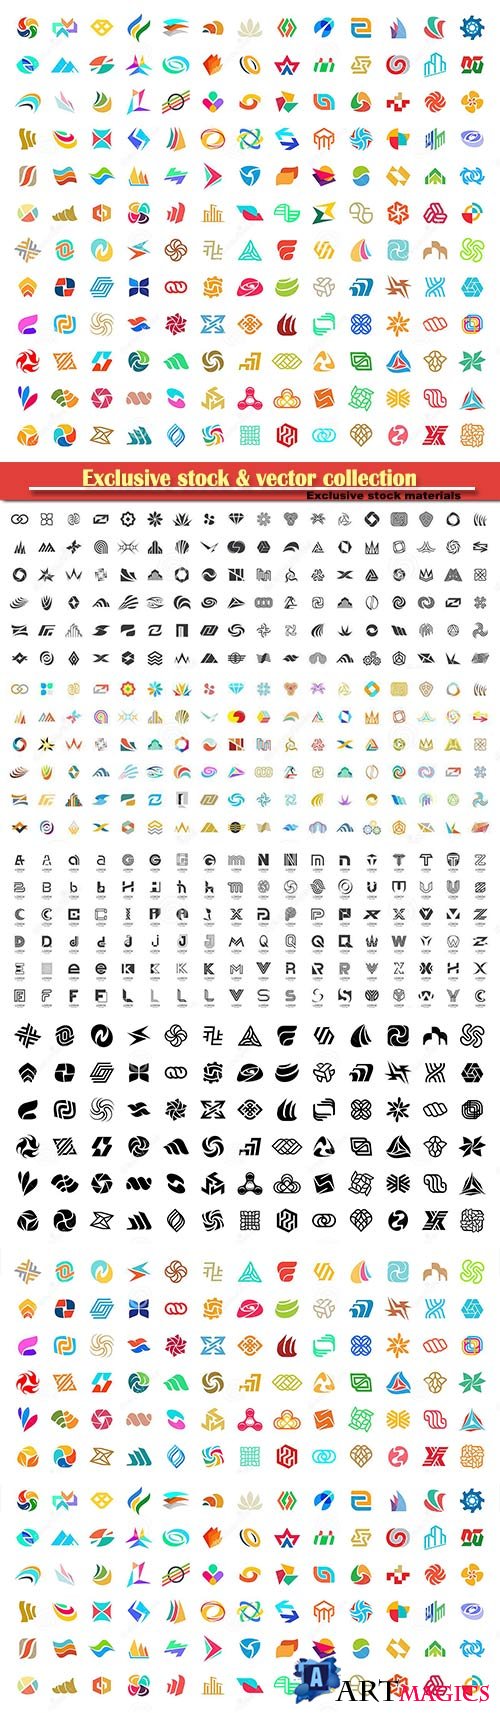 Abstract logos collection